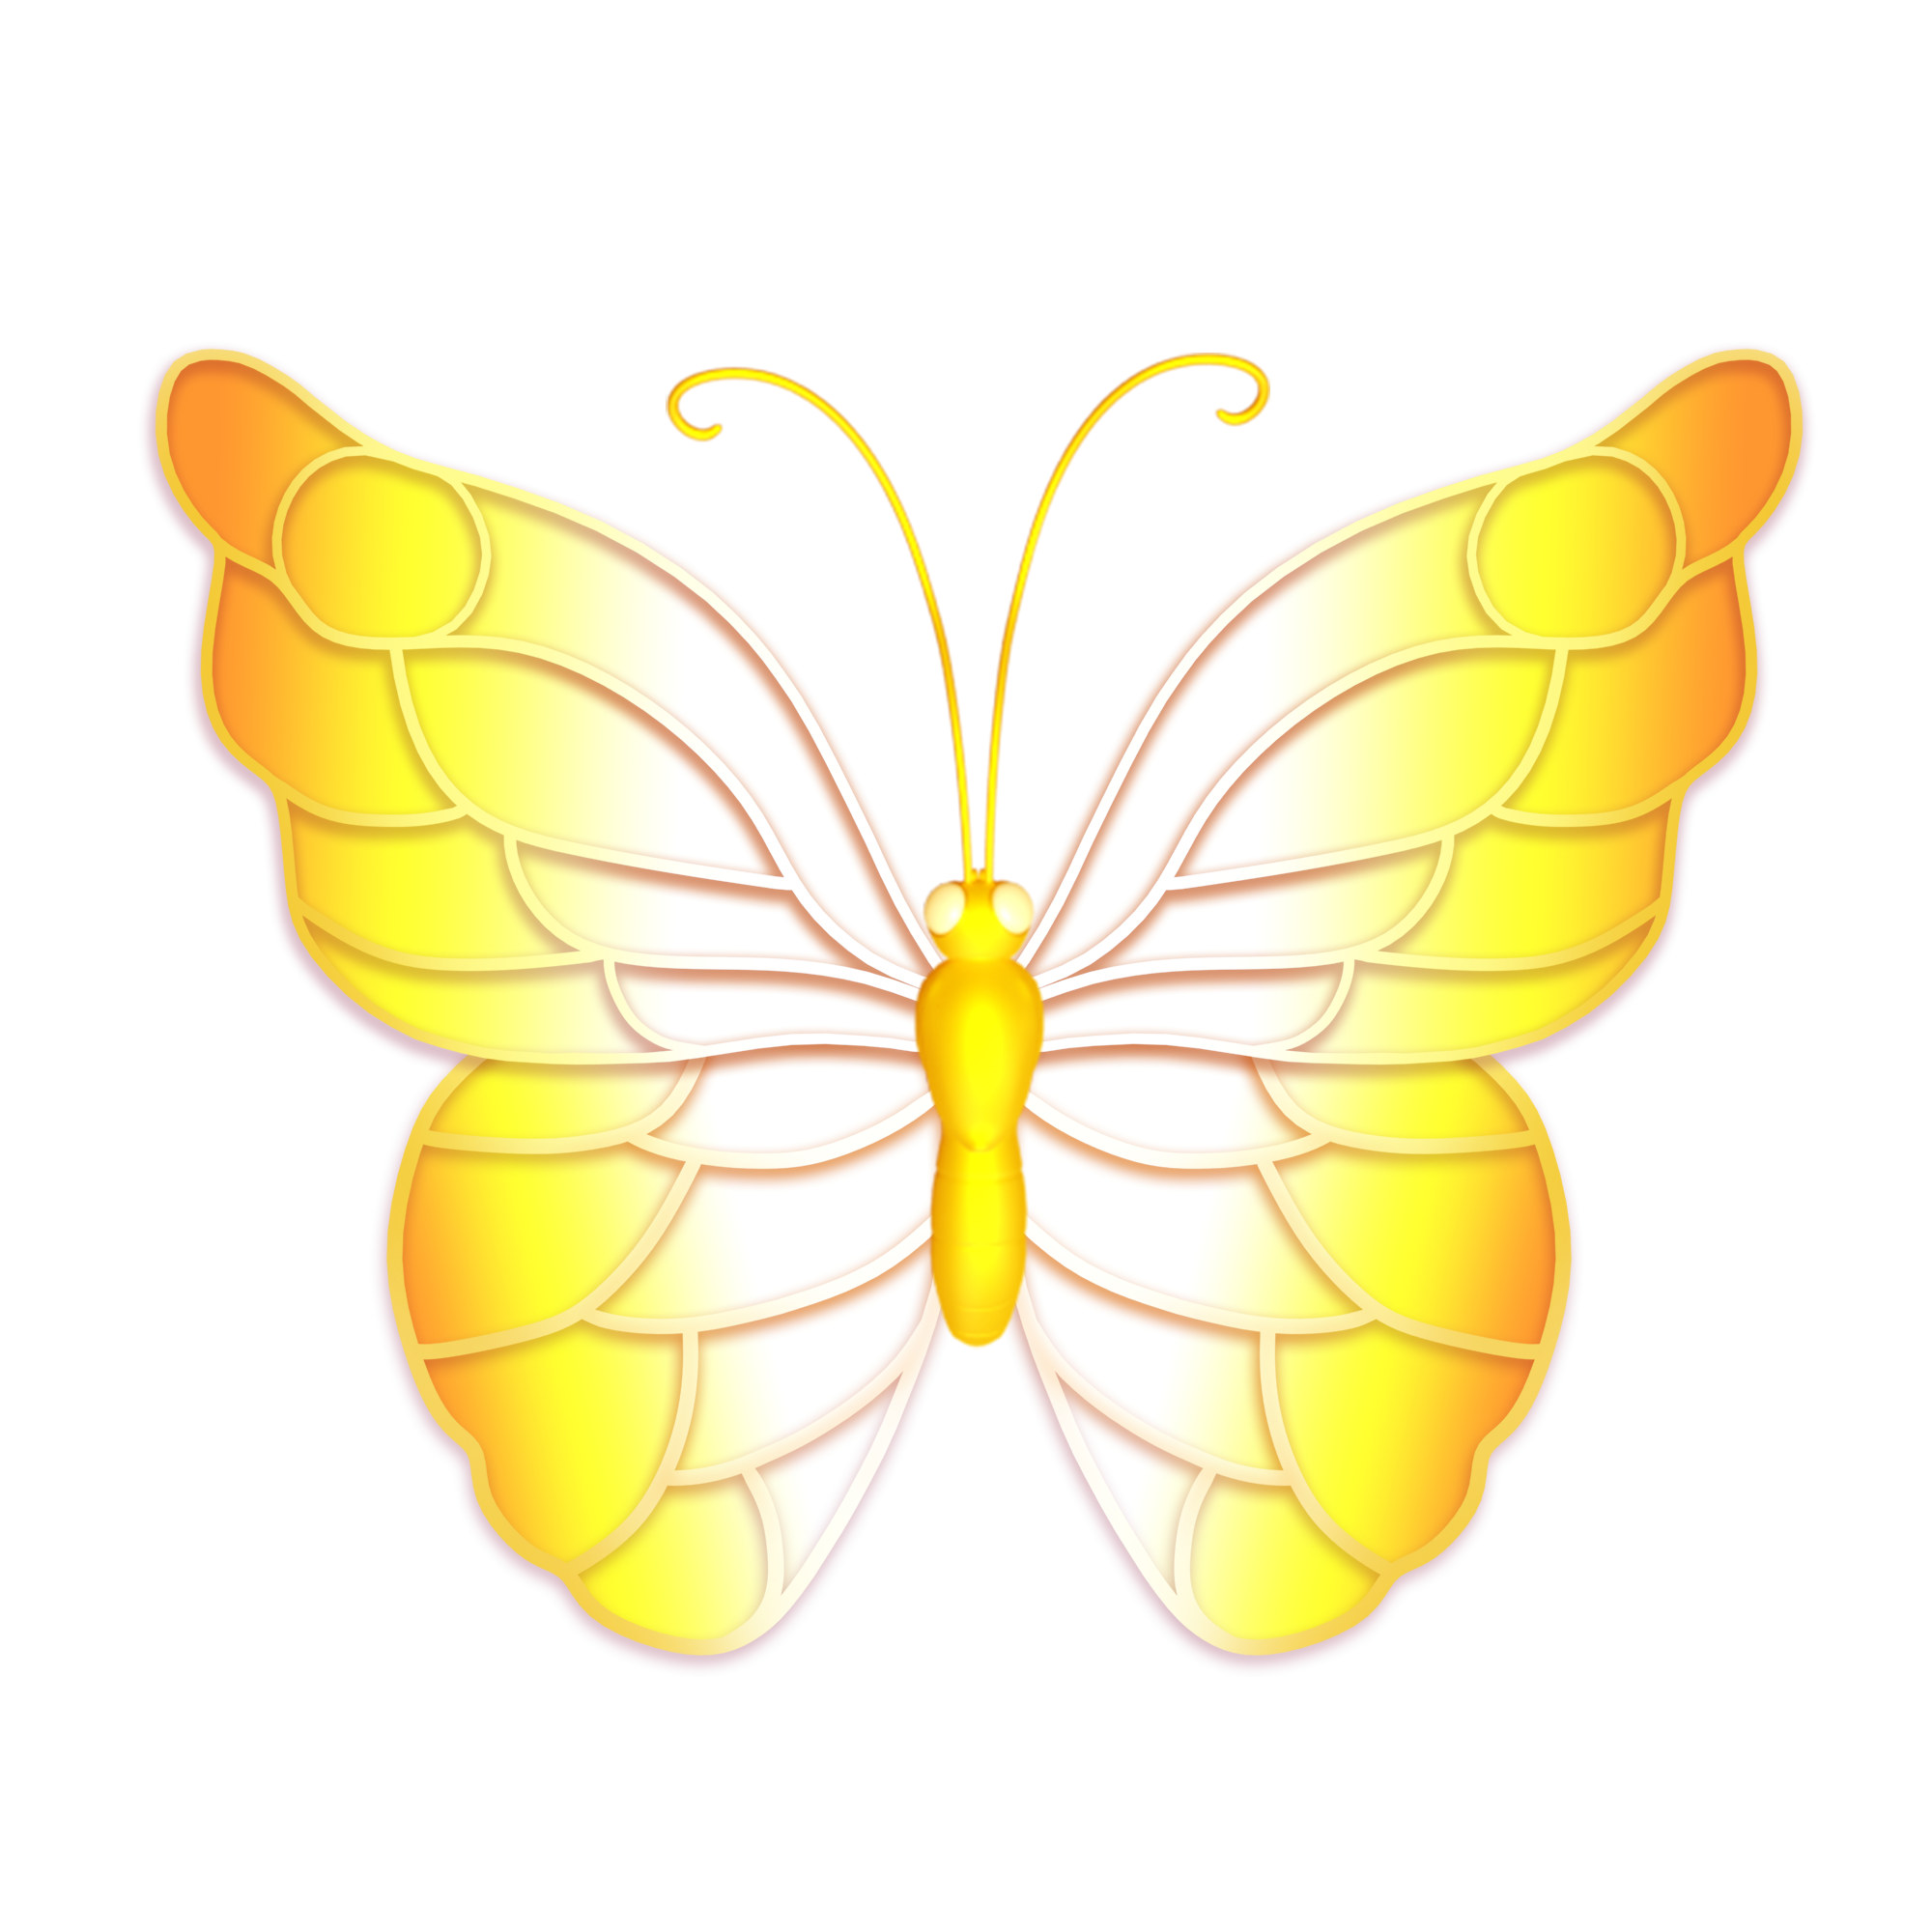 09_symbol_butterflyyellow_btrflystx2.png thumbnail